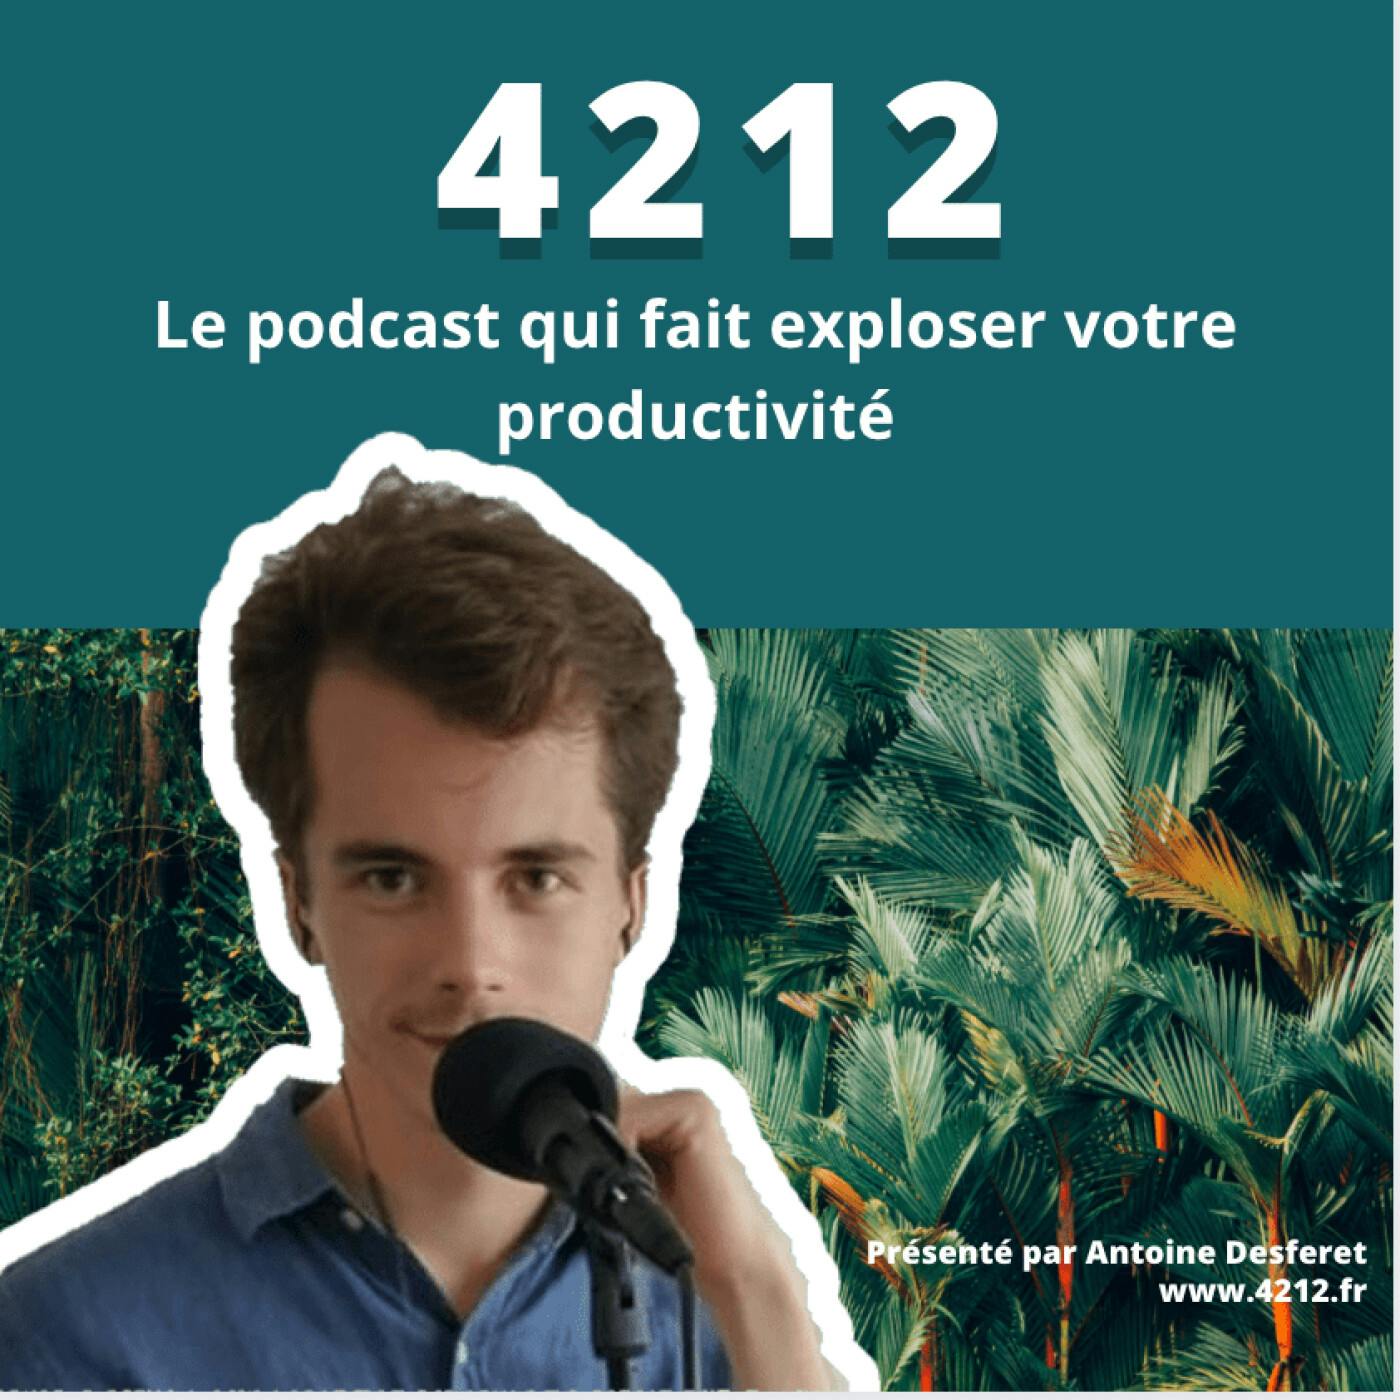 4212 podcast